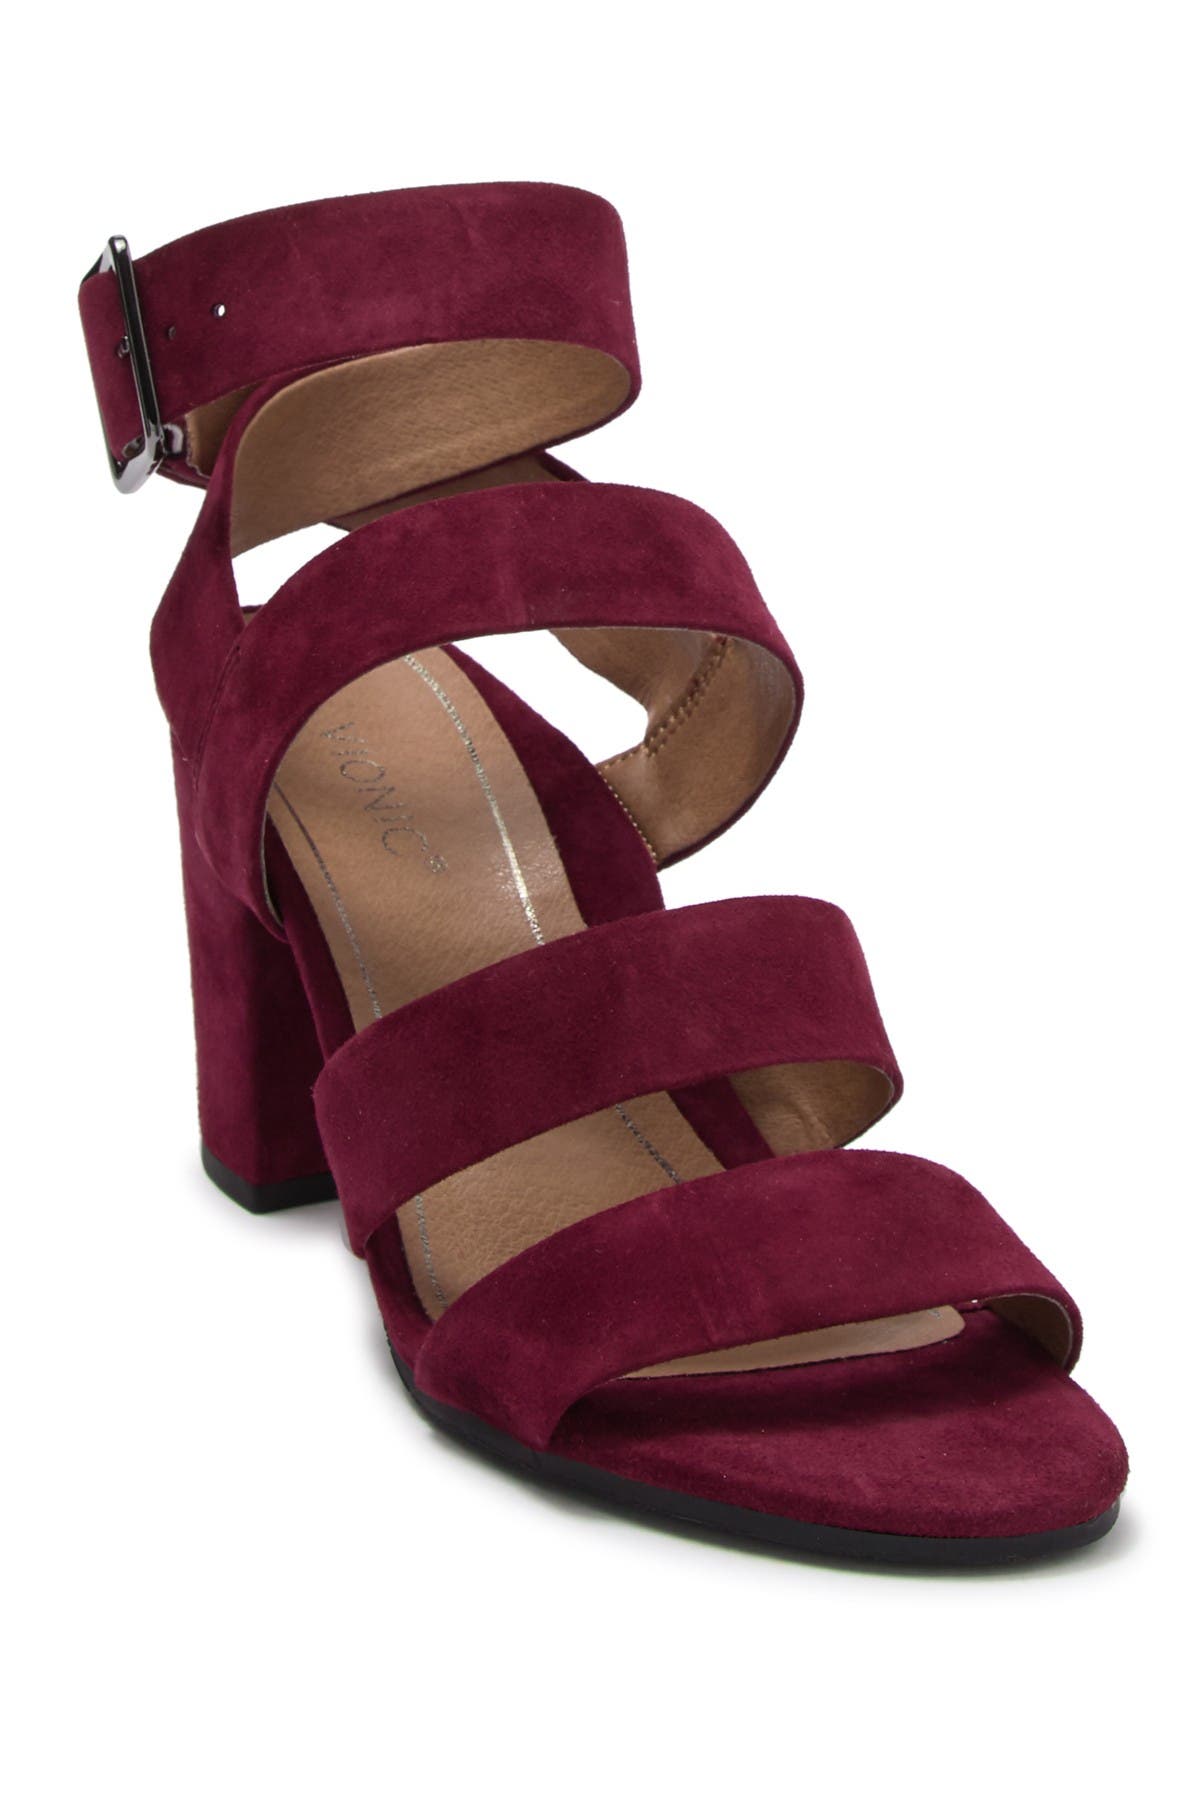 vionic blaire strappy sandal